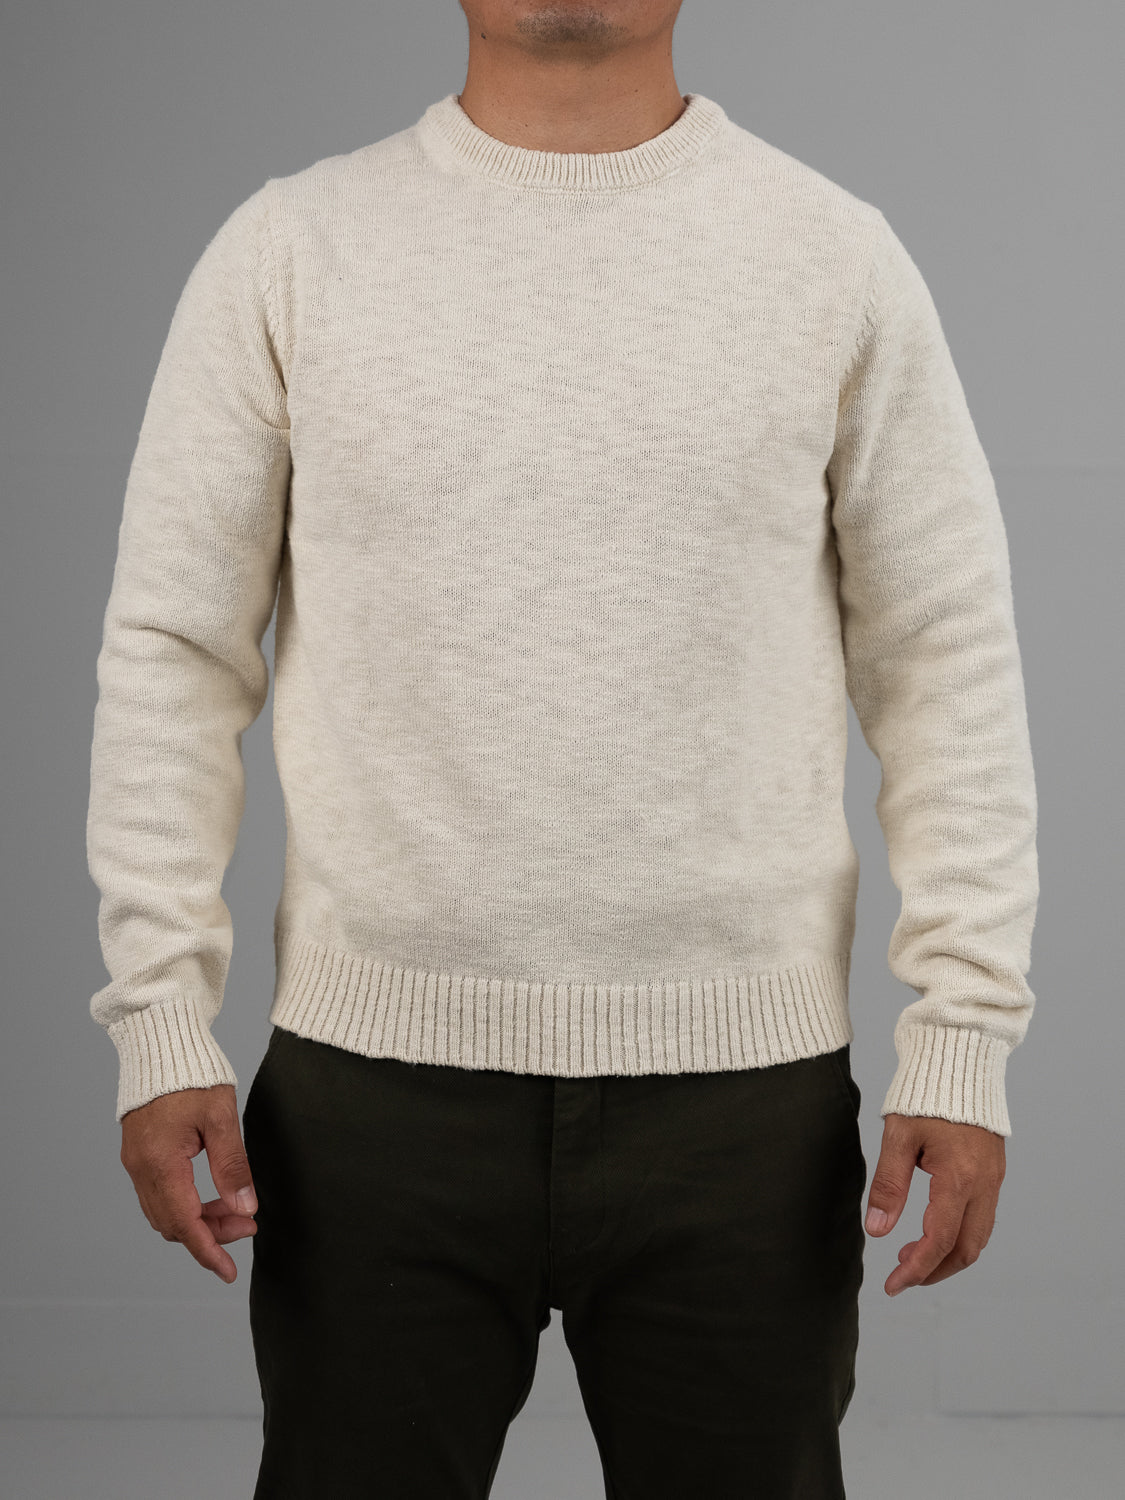 Odense Crew Neck Slub Yarn Sweater